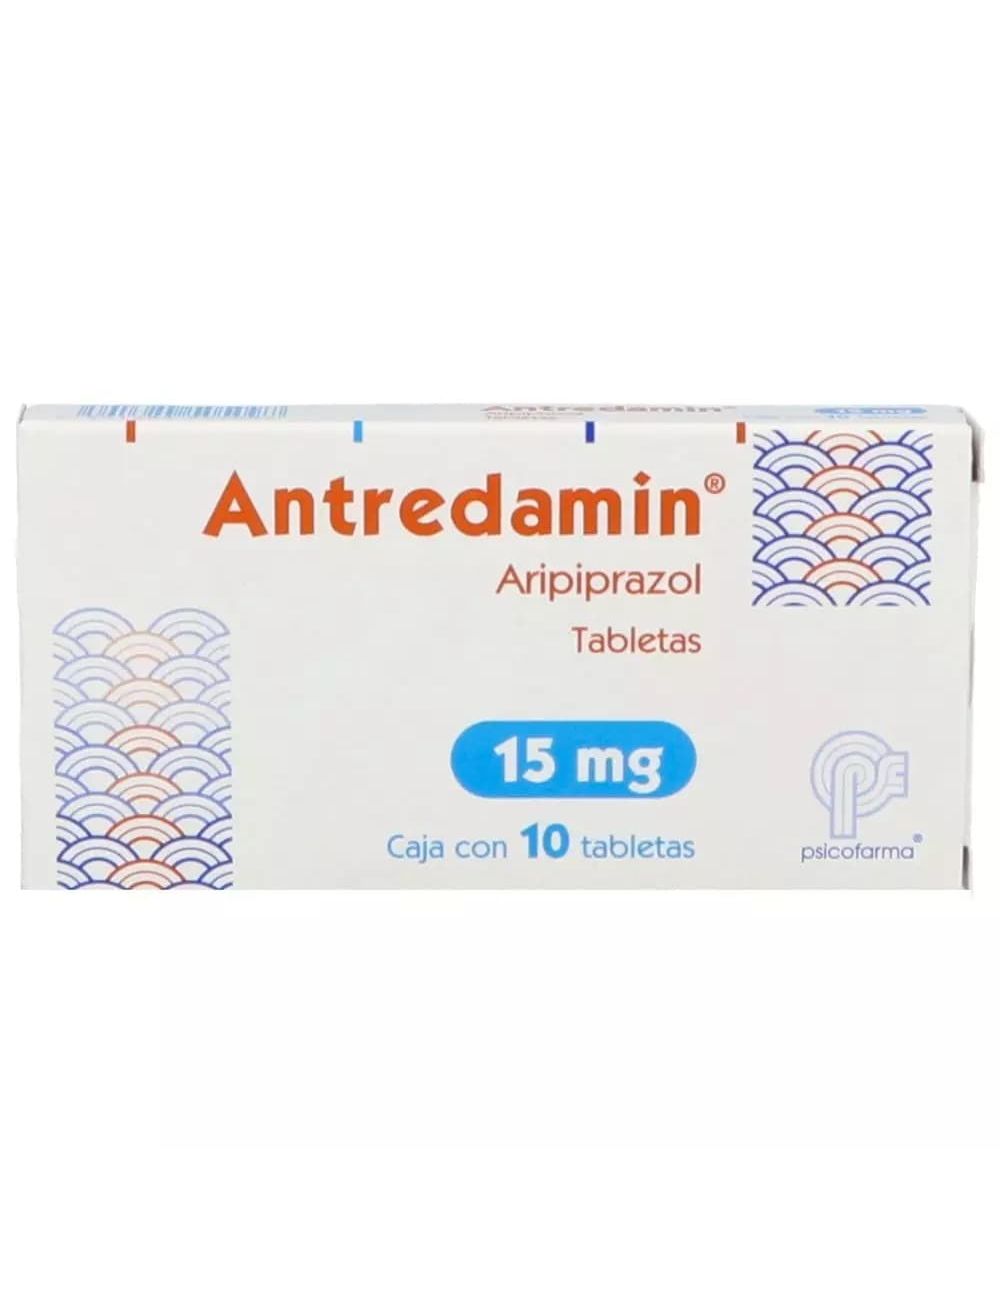 Antredamin 15 mg Caja con 10 Tabletas